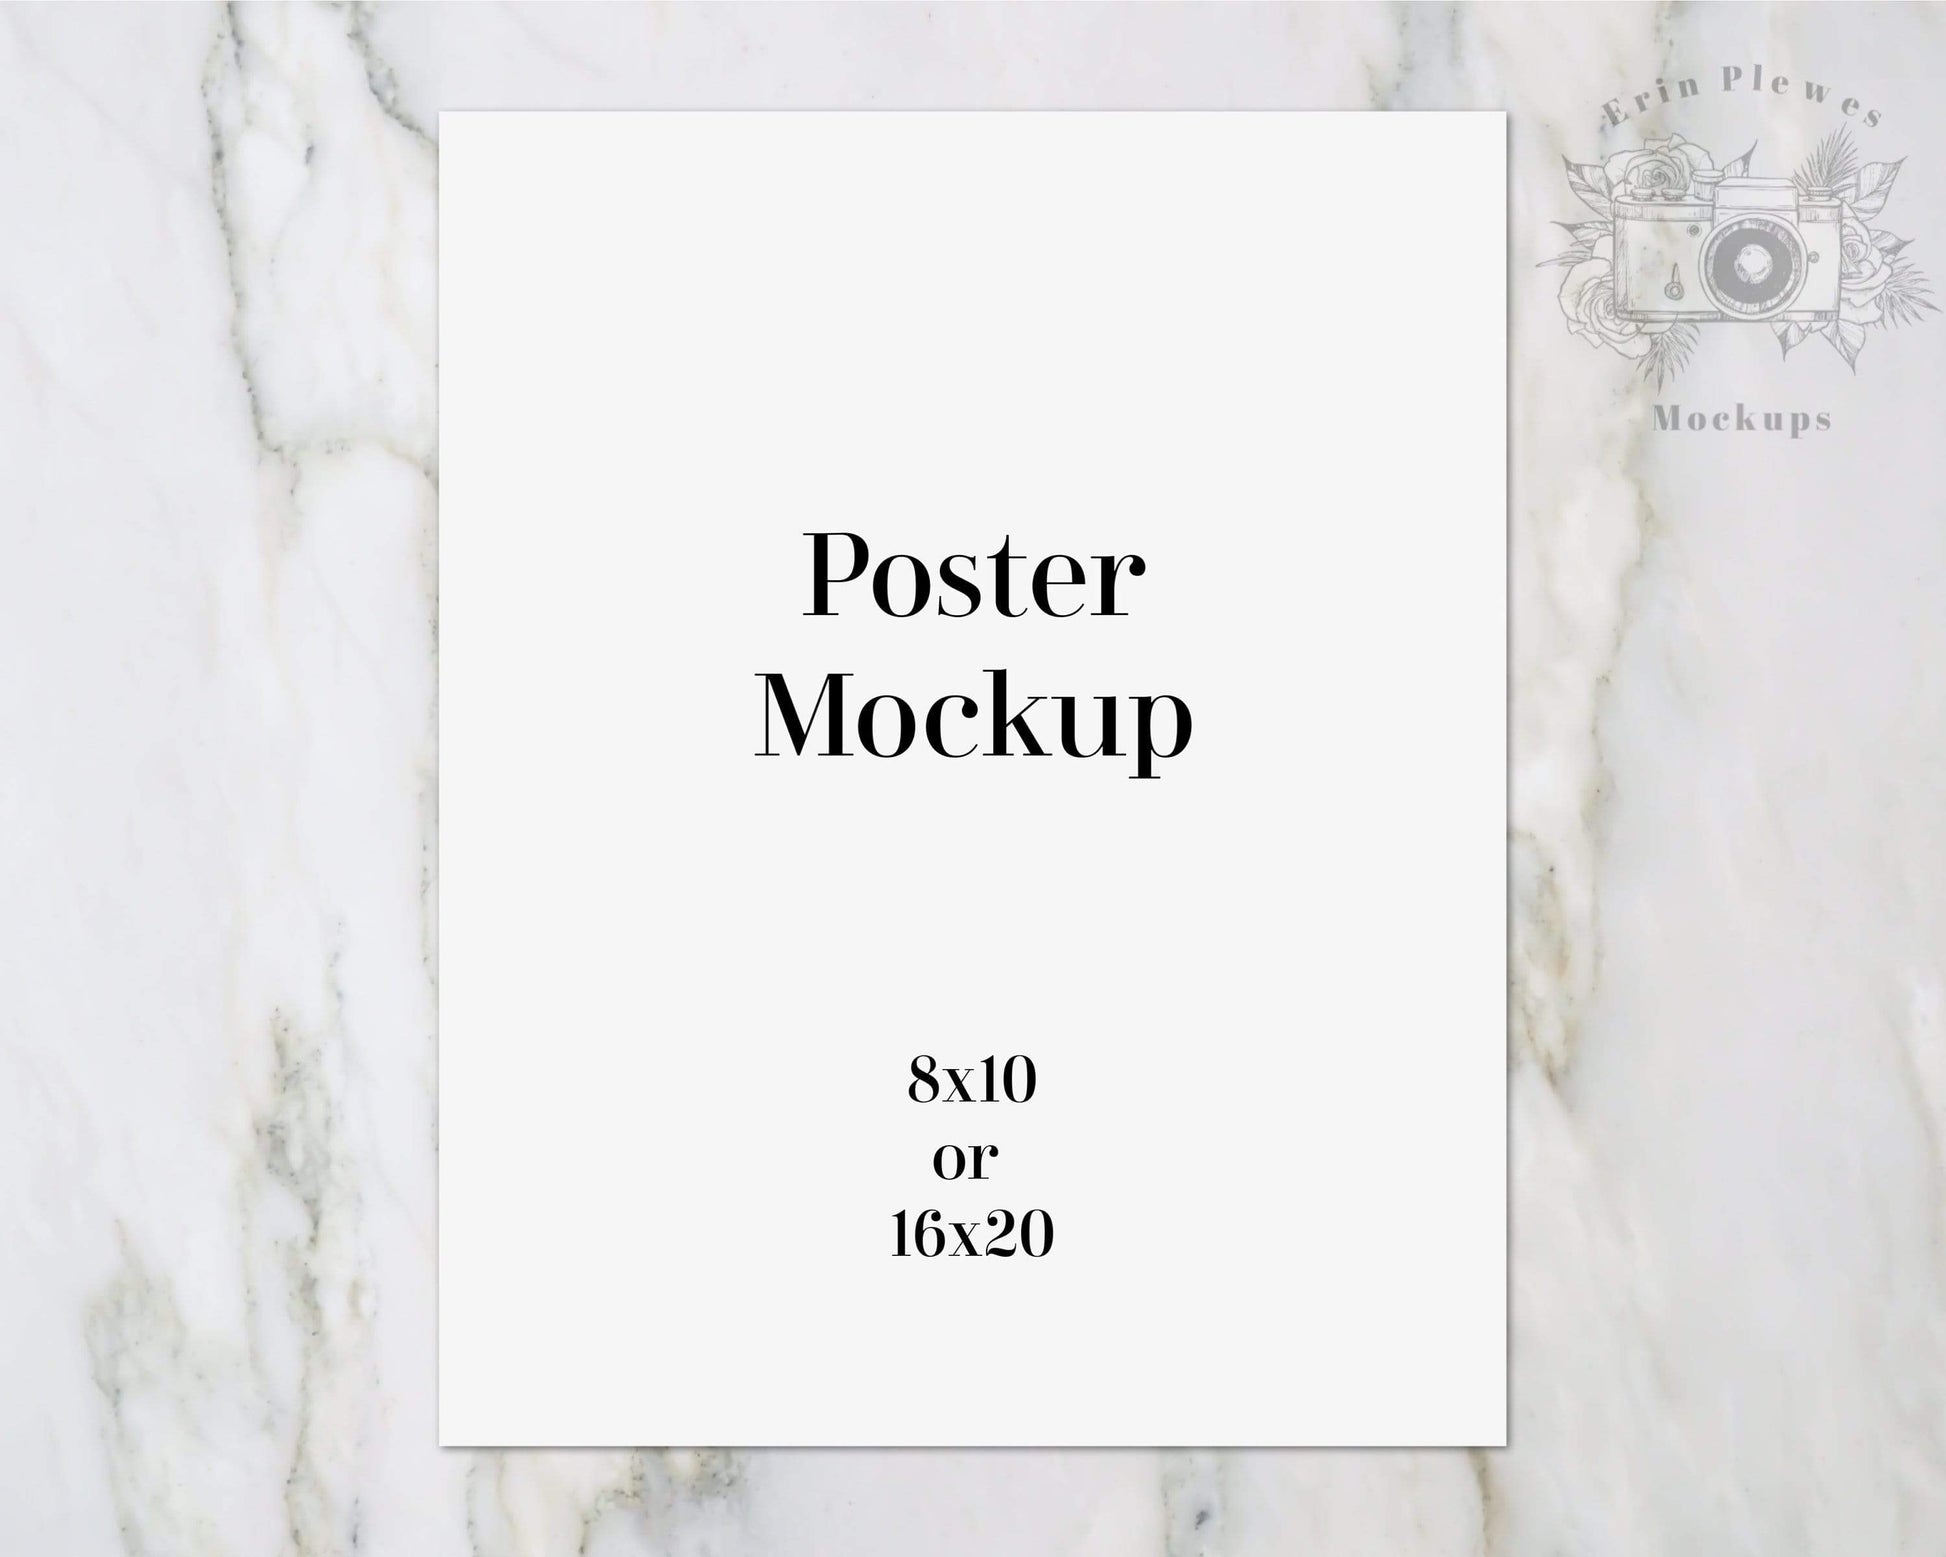 Erin Plewes Mockups 8x10 Poster Mockup Flat Lay, Print mockup on marble, Clean minimal paper mock up Jpeg Instant Digital Download Template